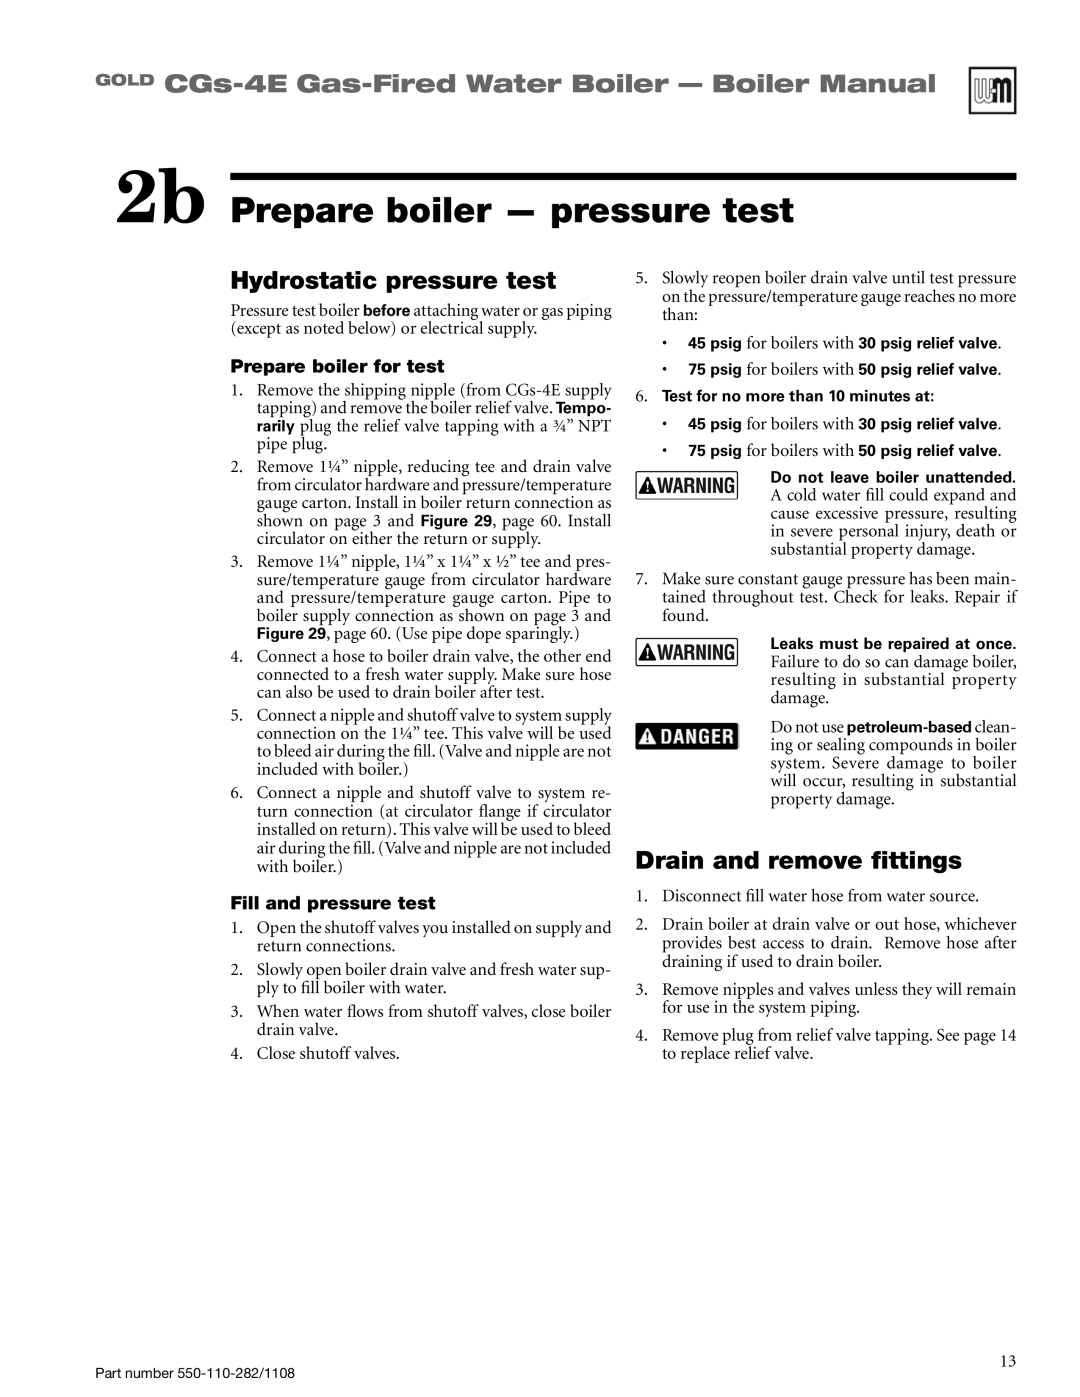 Weil-McLain CGS-4E manual 2b Prepare boiler - pressure test, Hydrostatic pressure test, Drain and remove fittings 